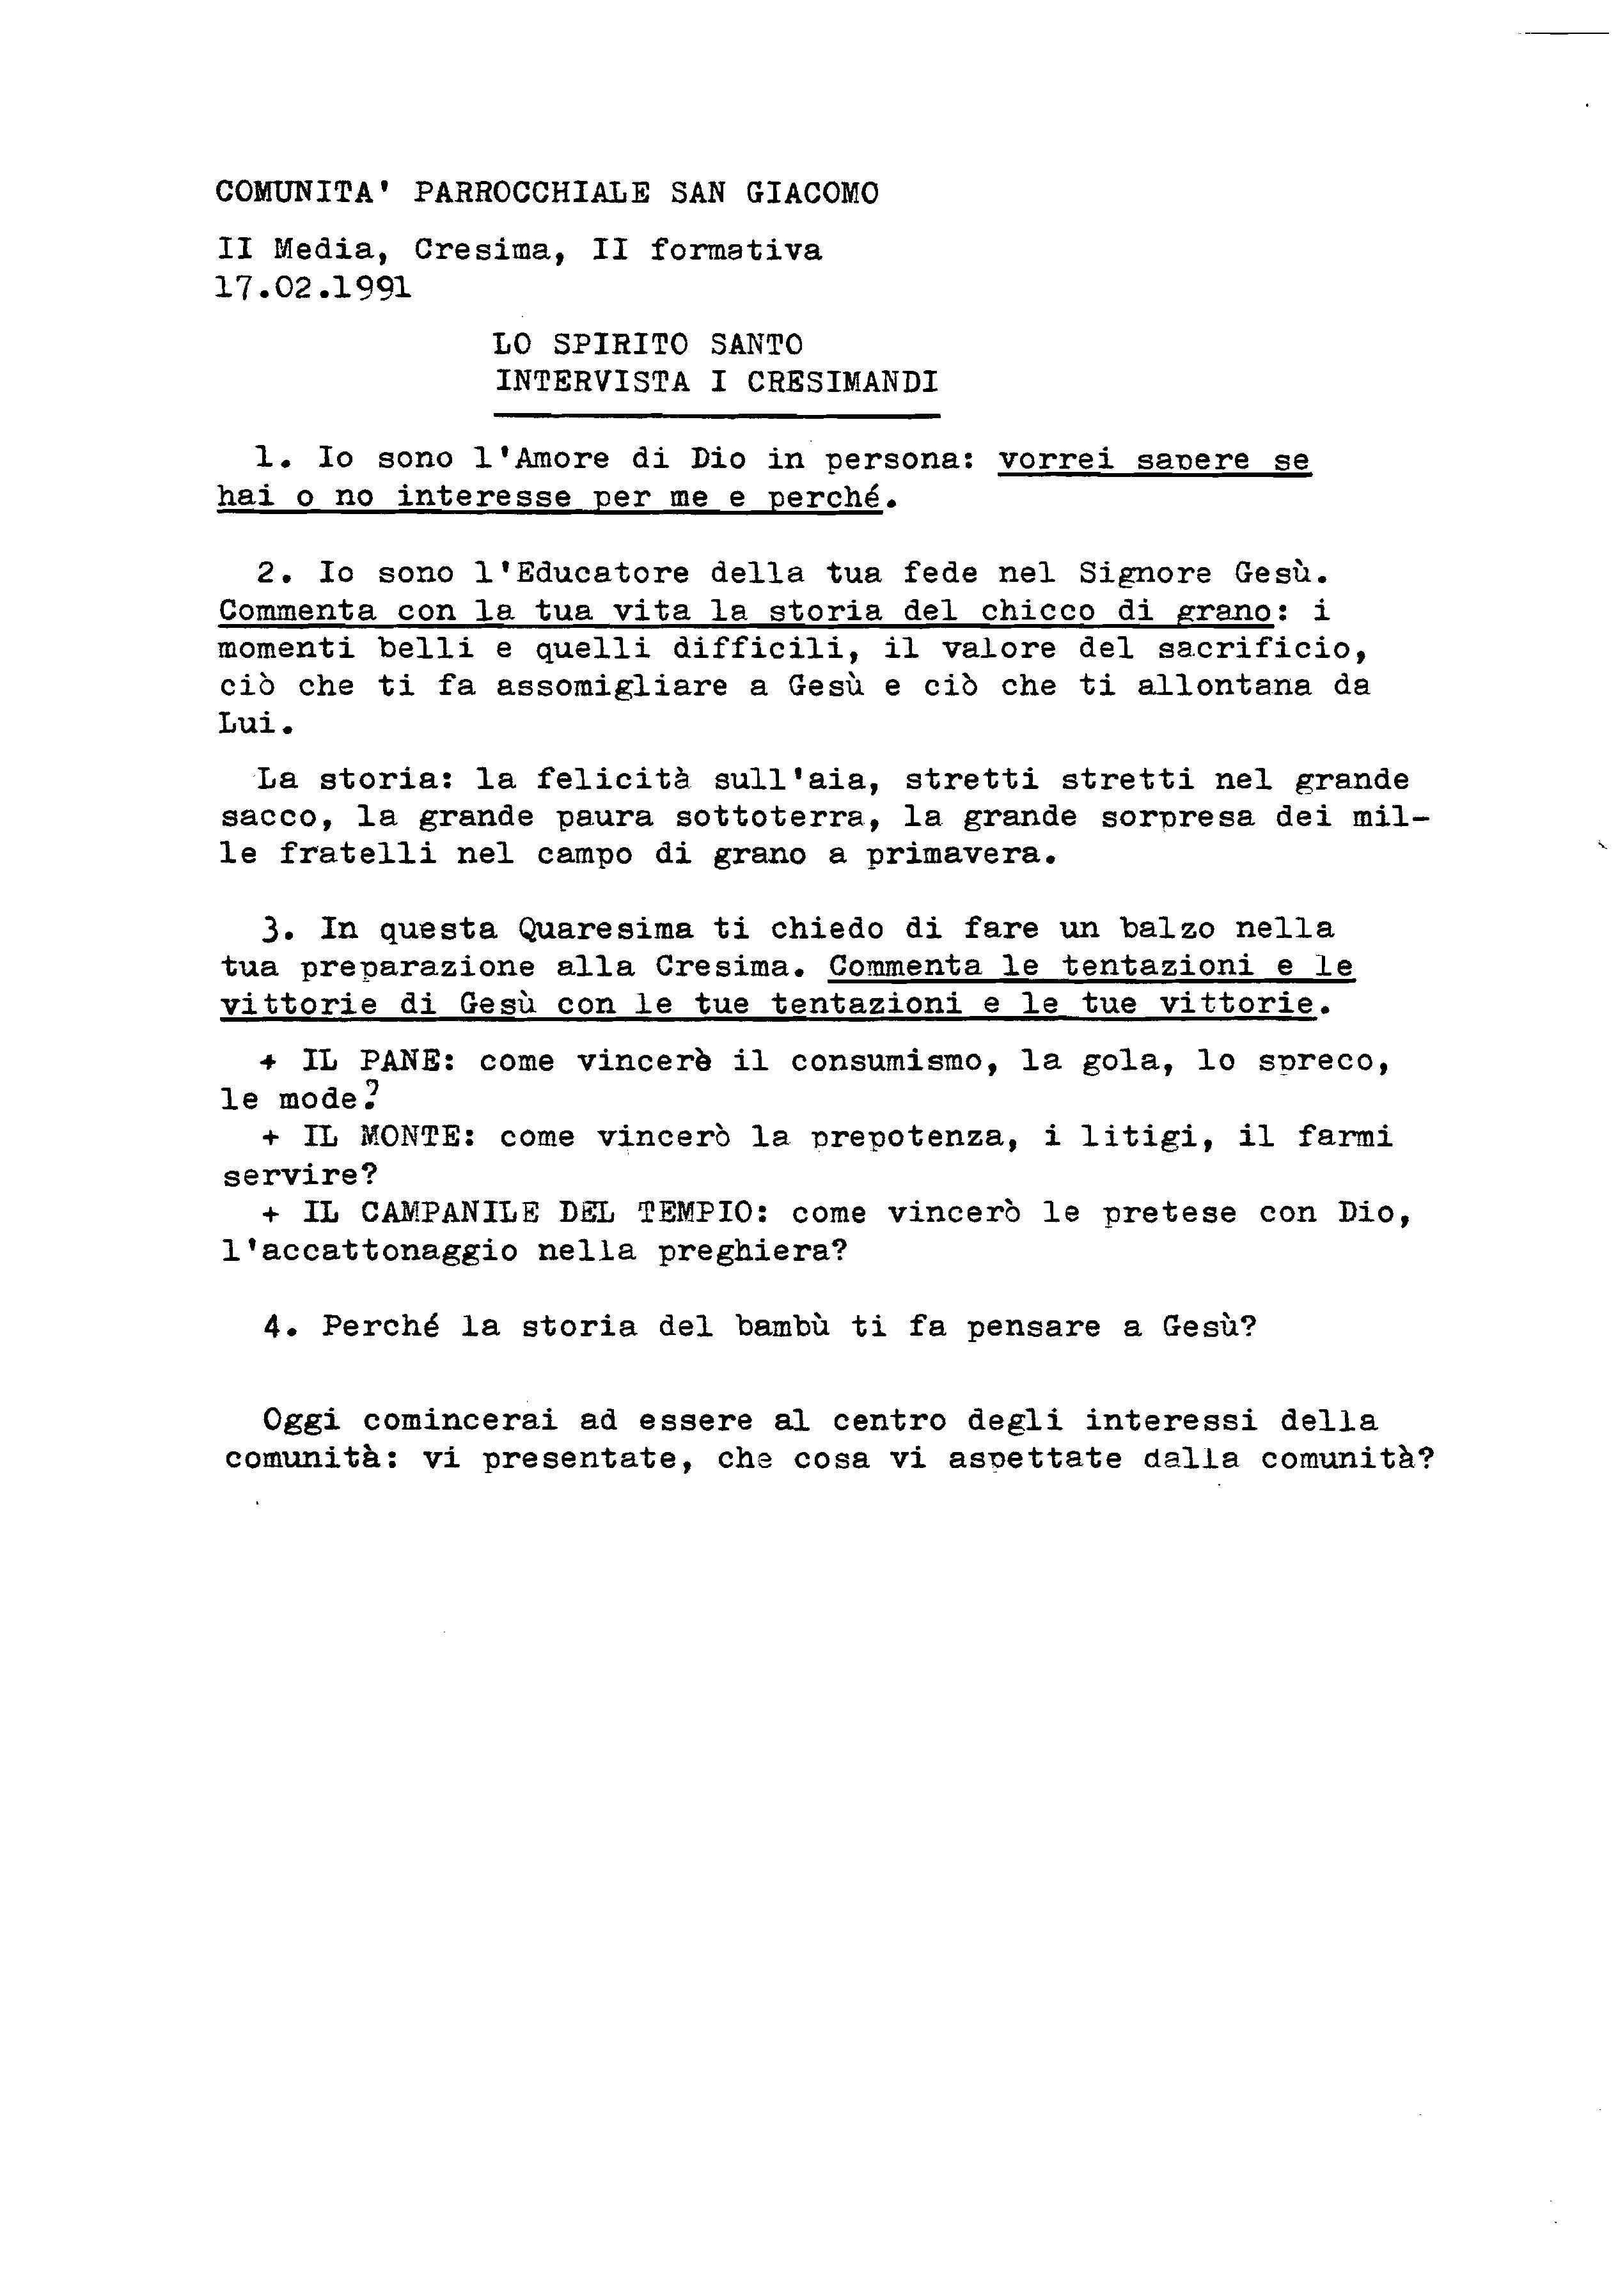 Cresim-1991_Lo_Spirito_Santo_intervista_i_cresimandi.pdf